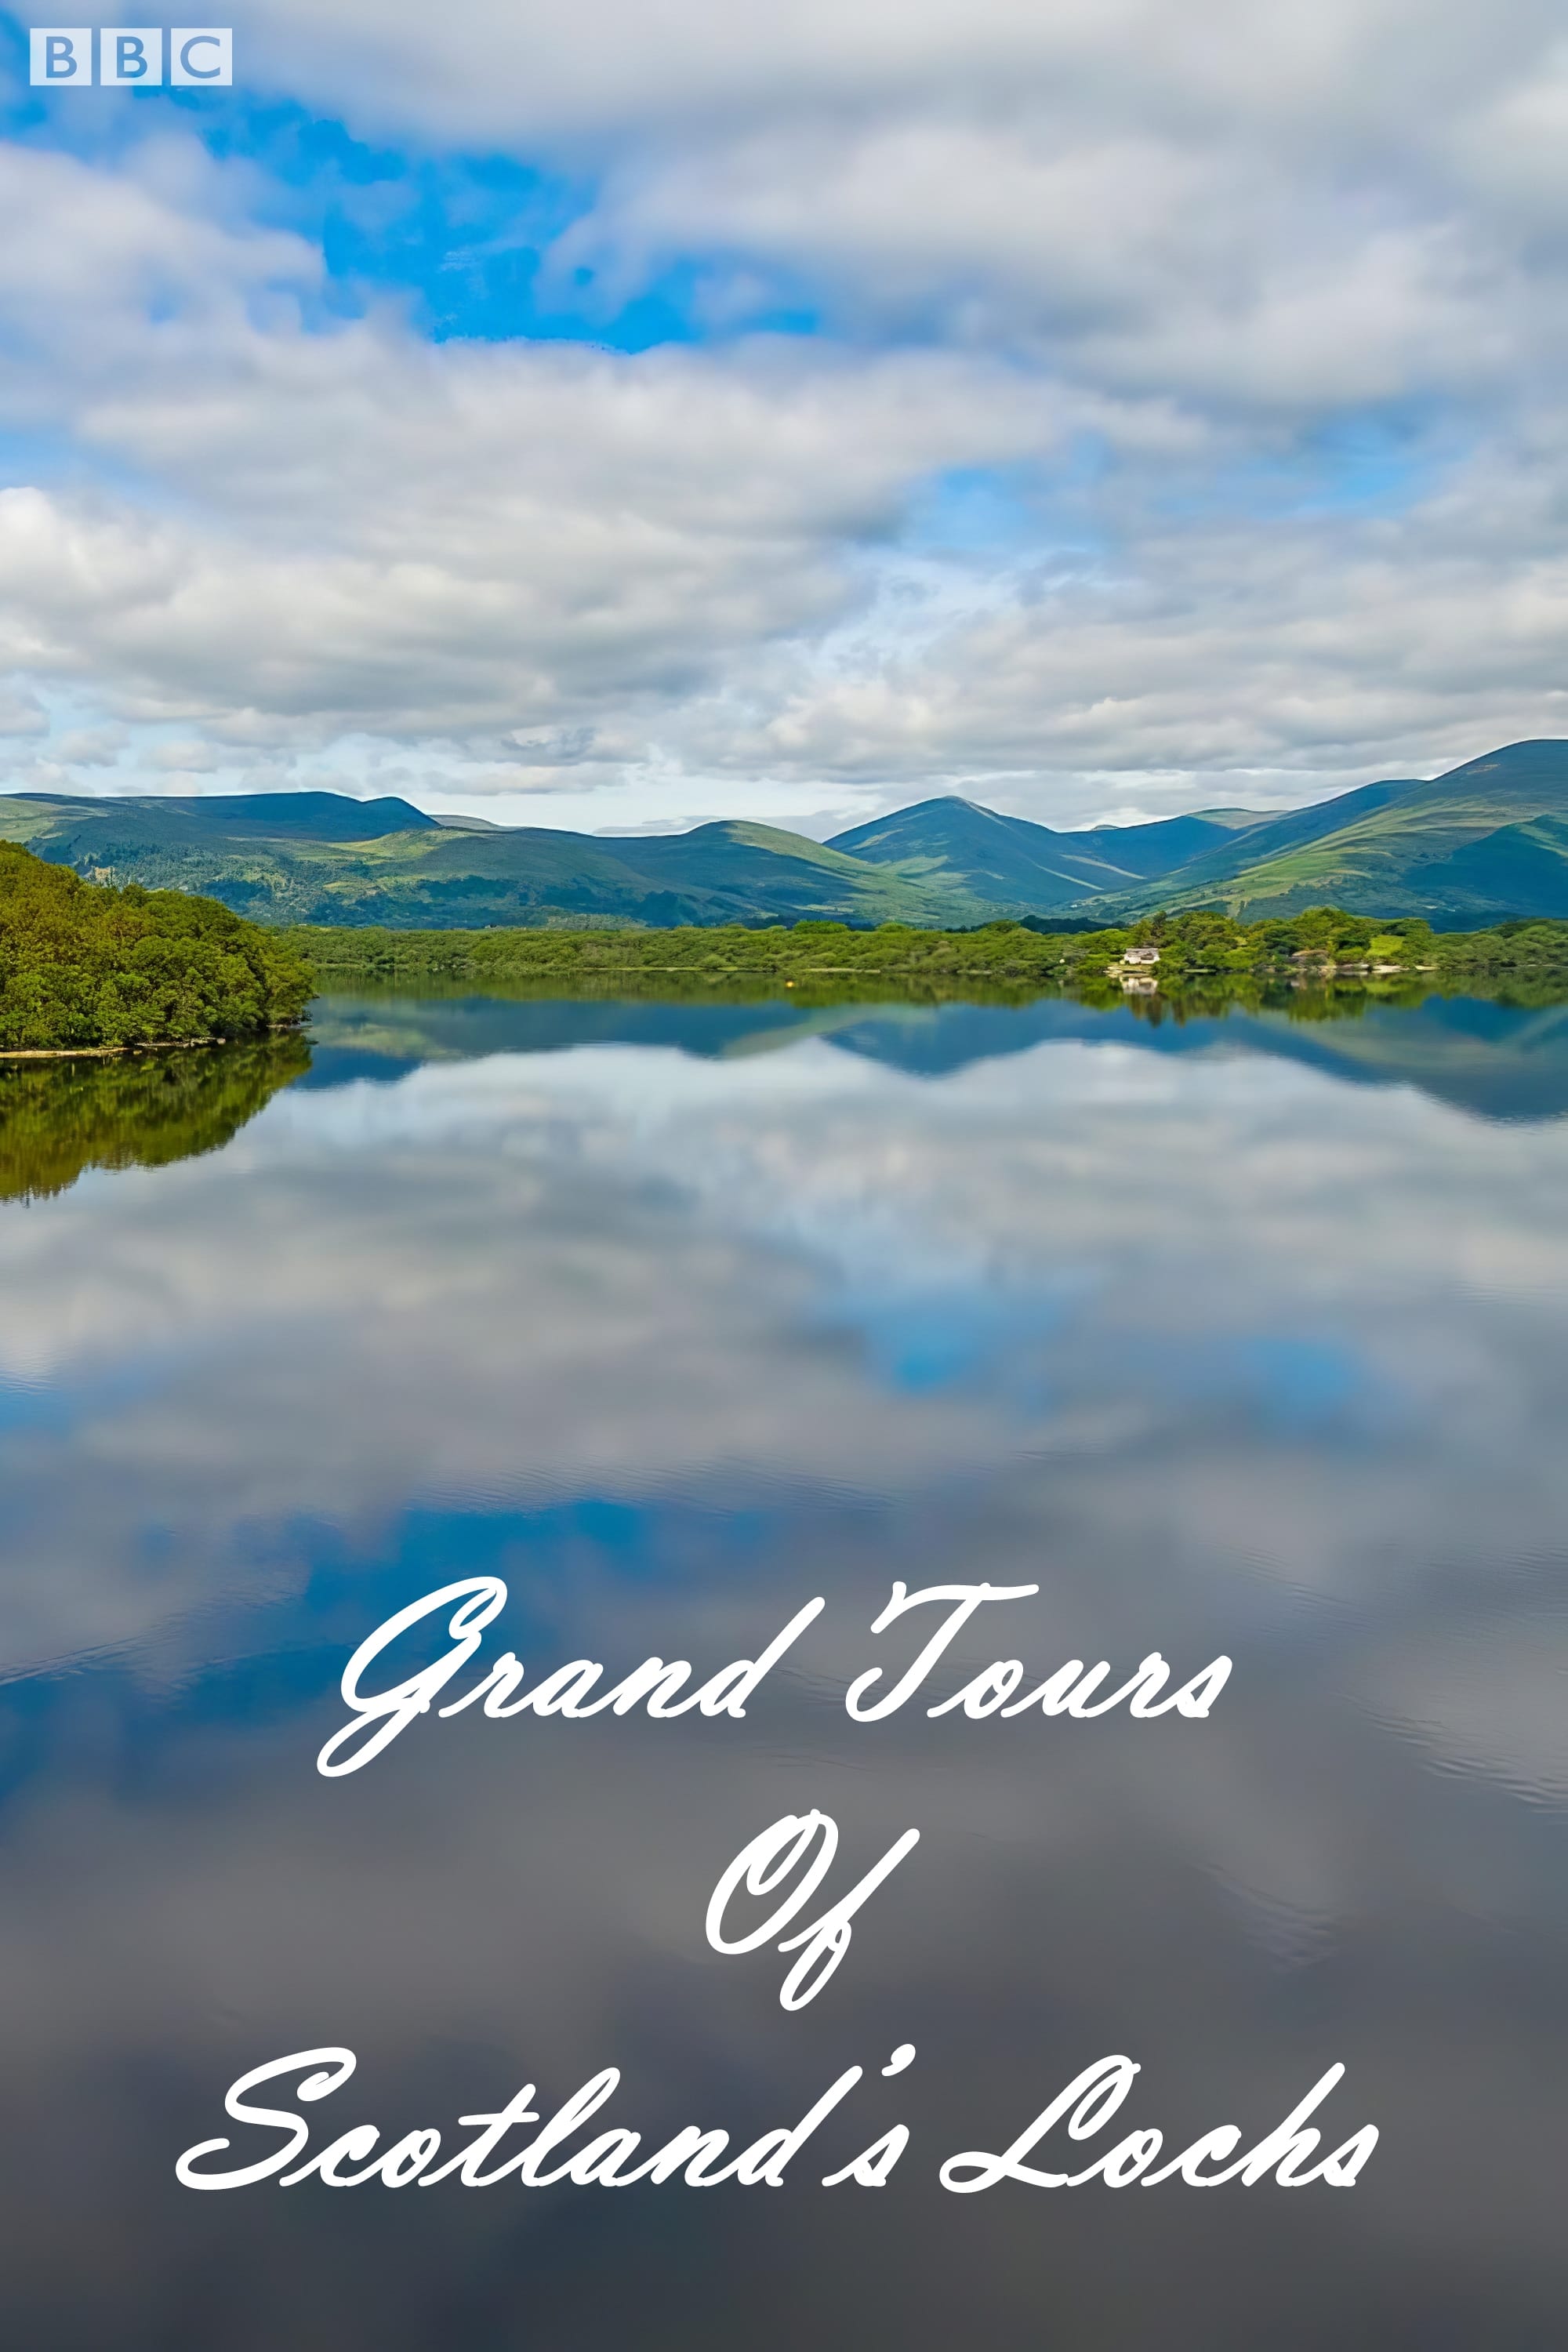 grand tours of scotland's lochs